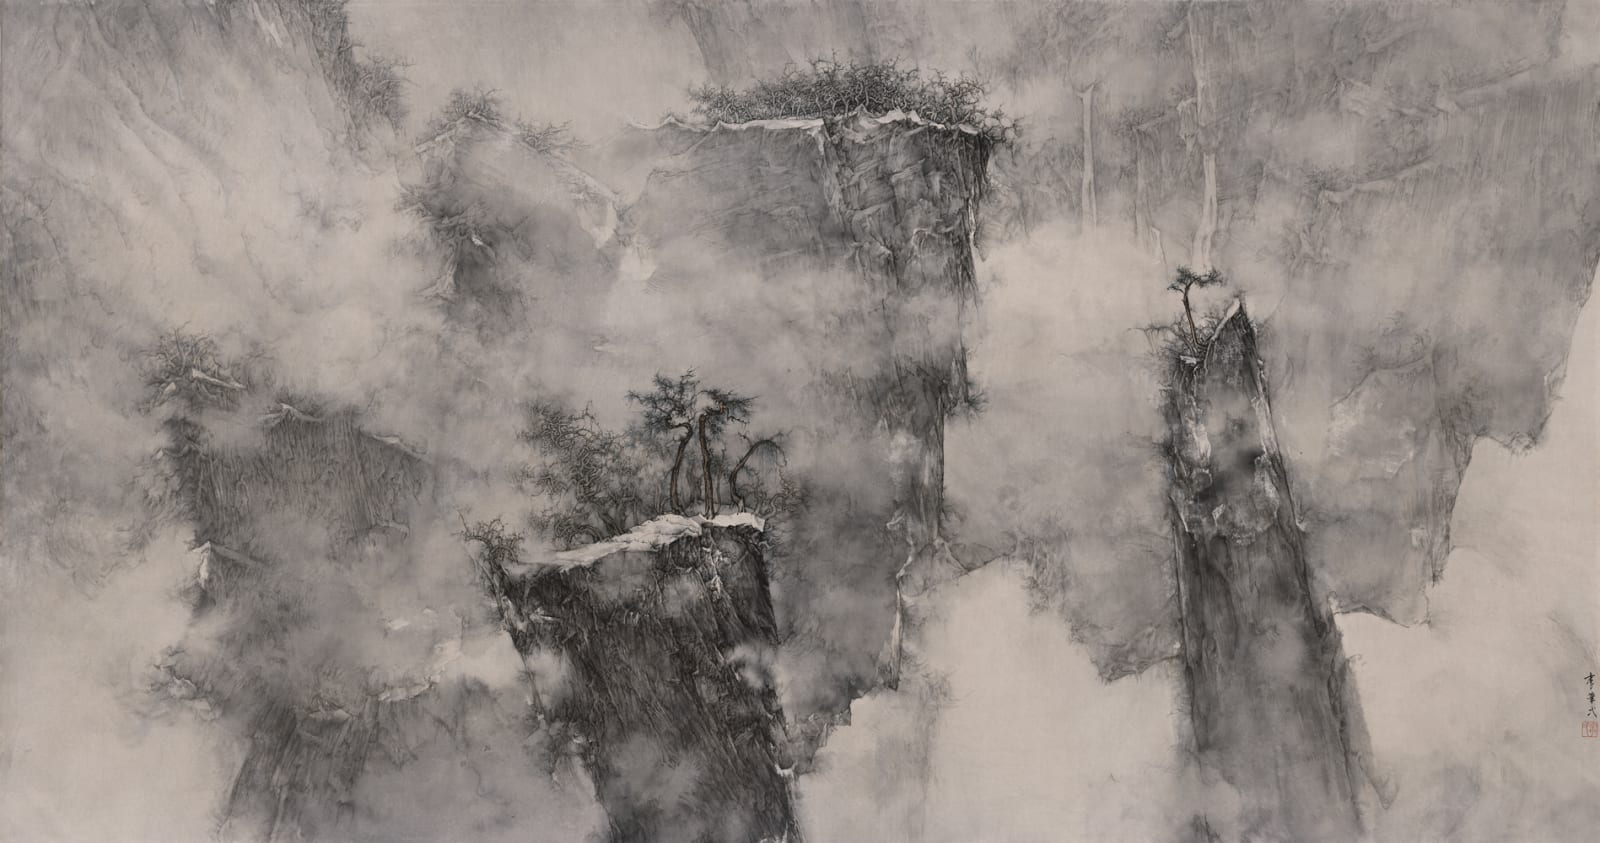 Li Huayi 李華弌, In the Density of Mist 《煙鎖山巒》, 2018